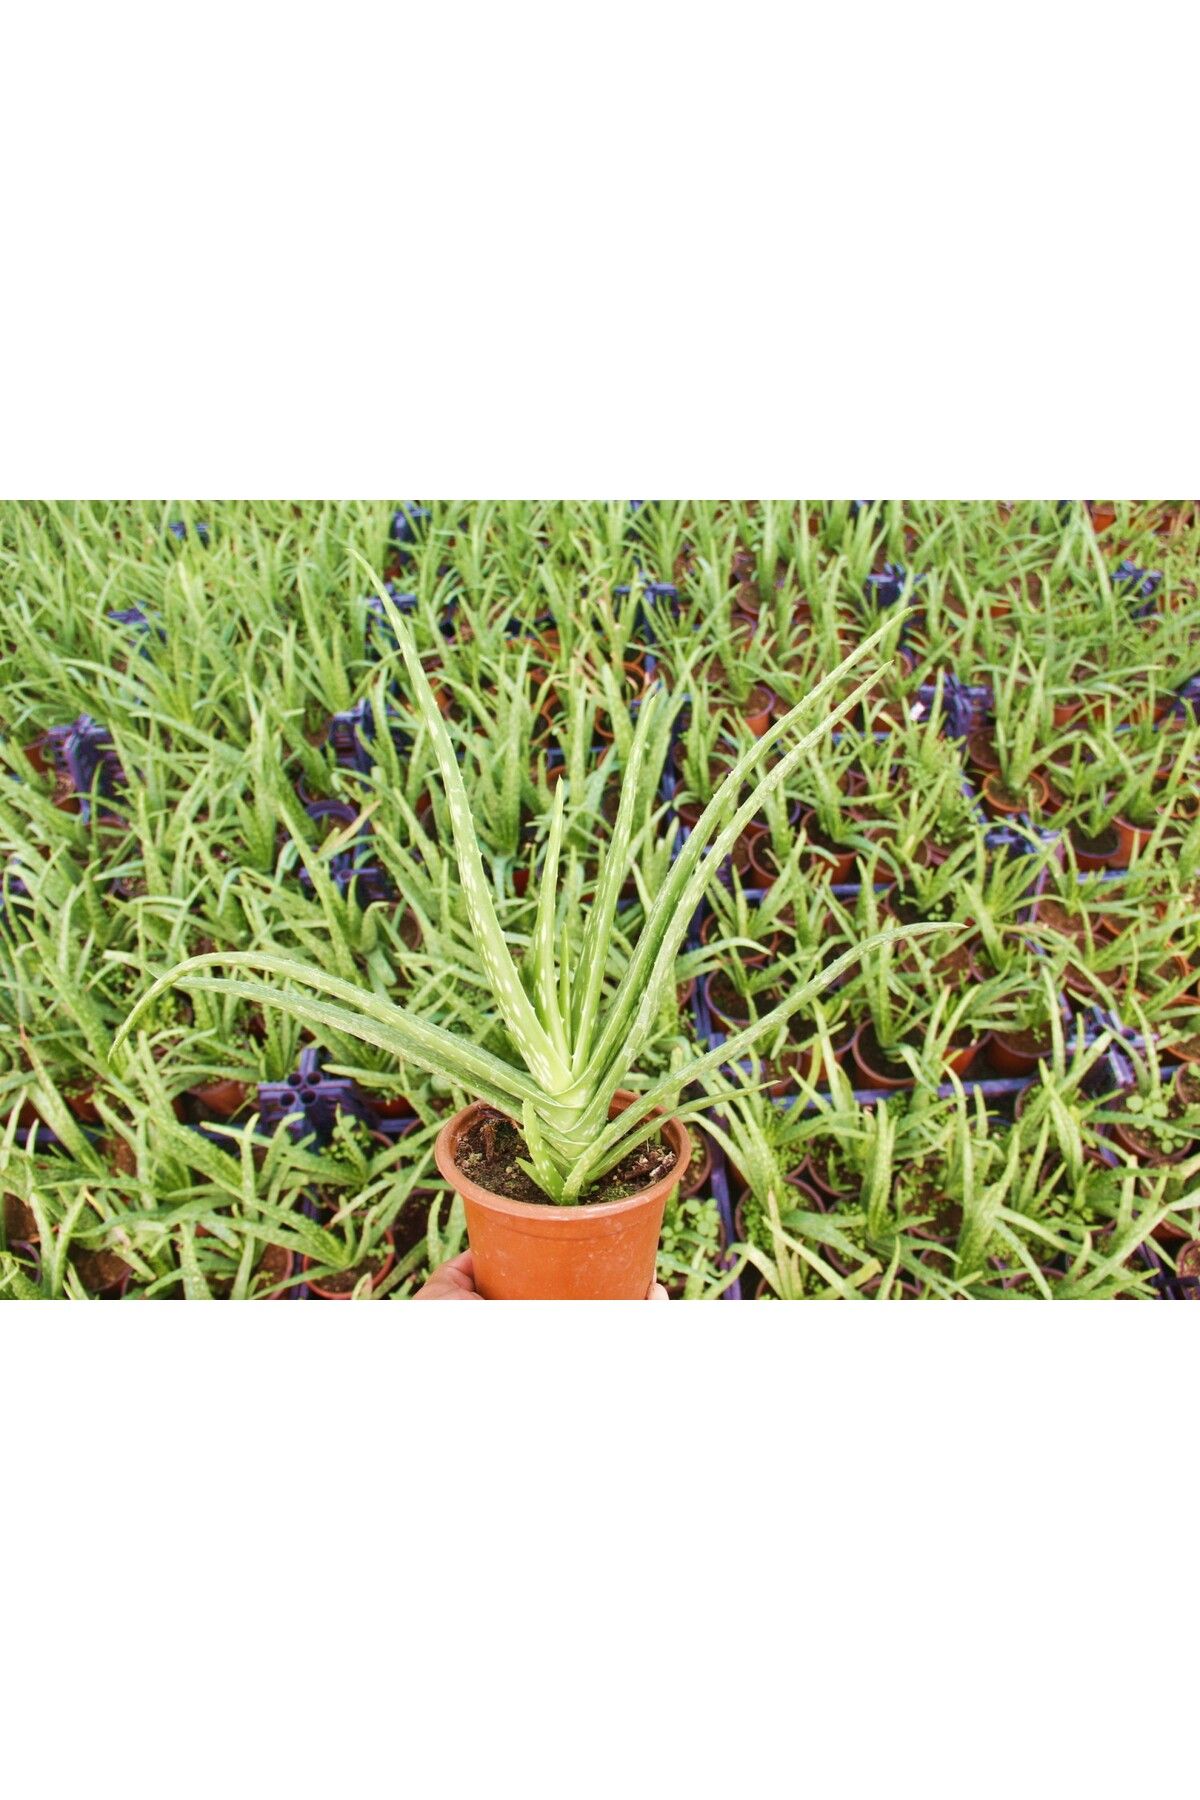 Tunç Botanik Aloe Vera Bitkisi 3 Adet